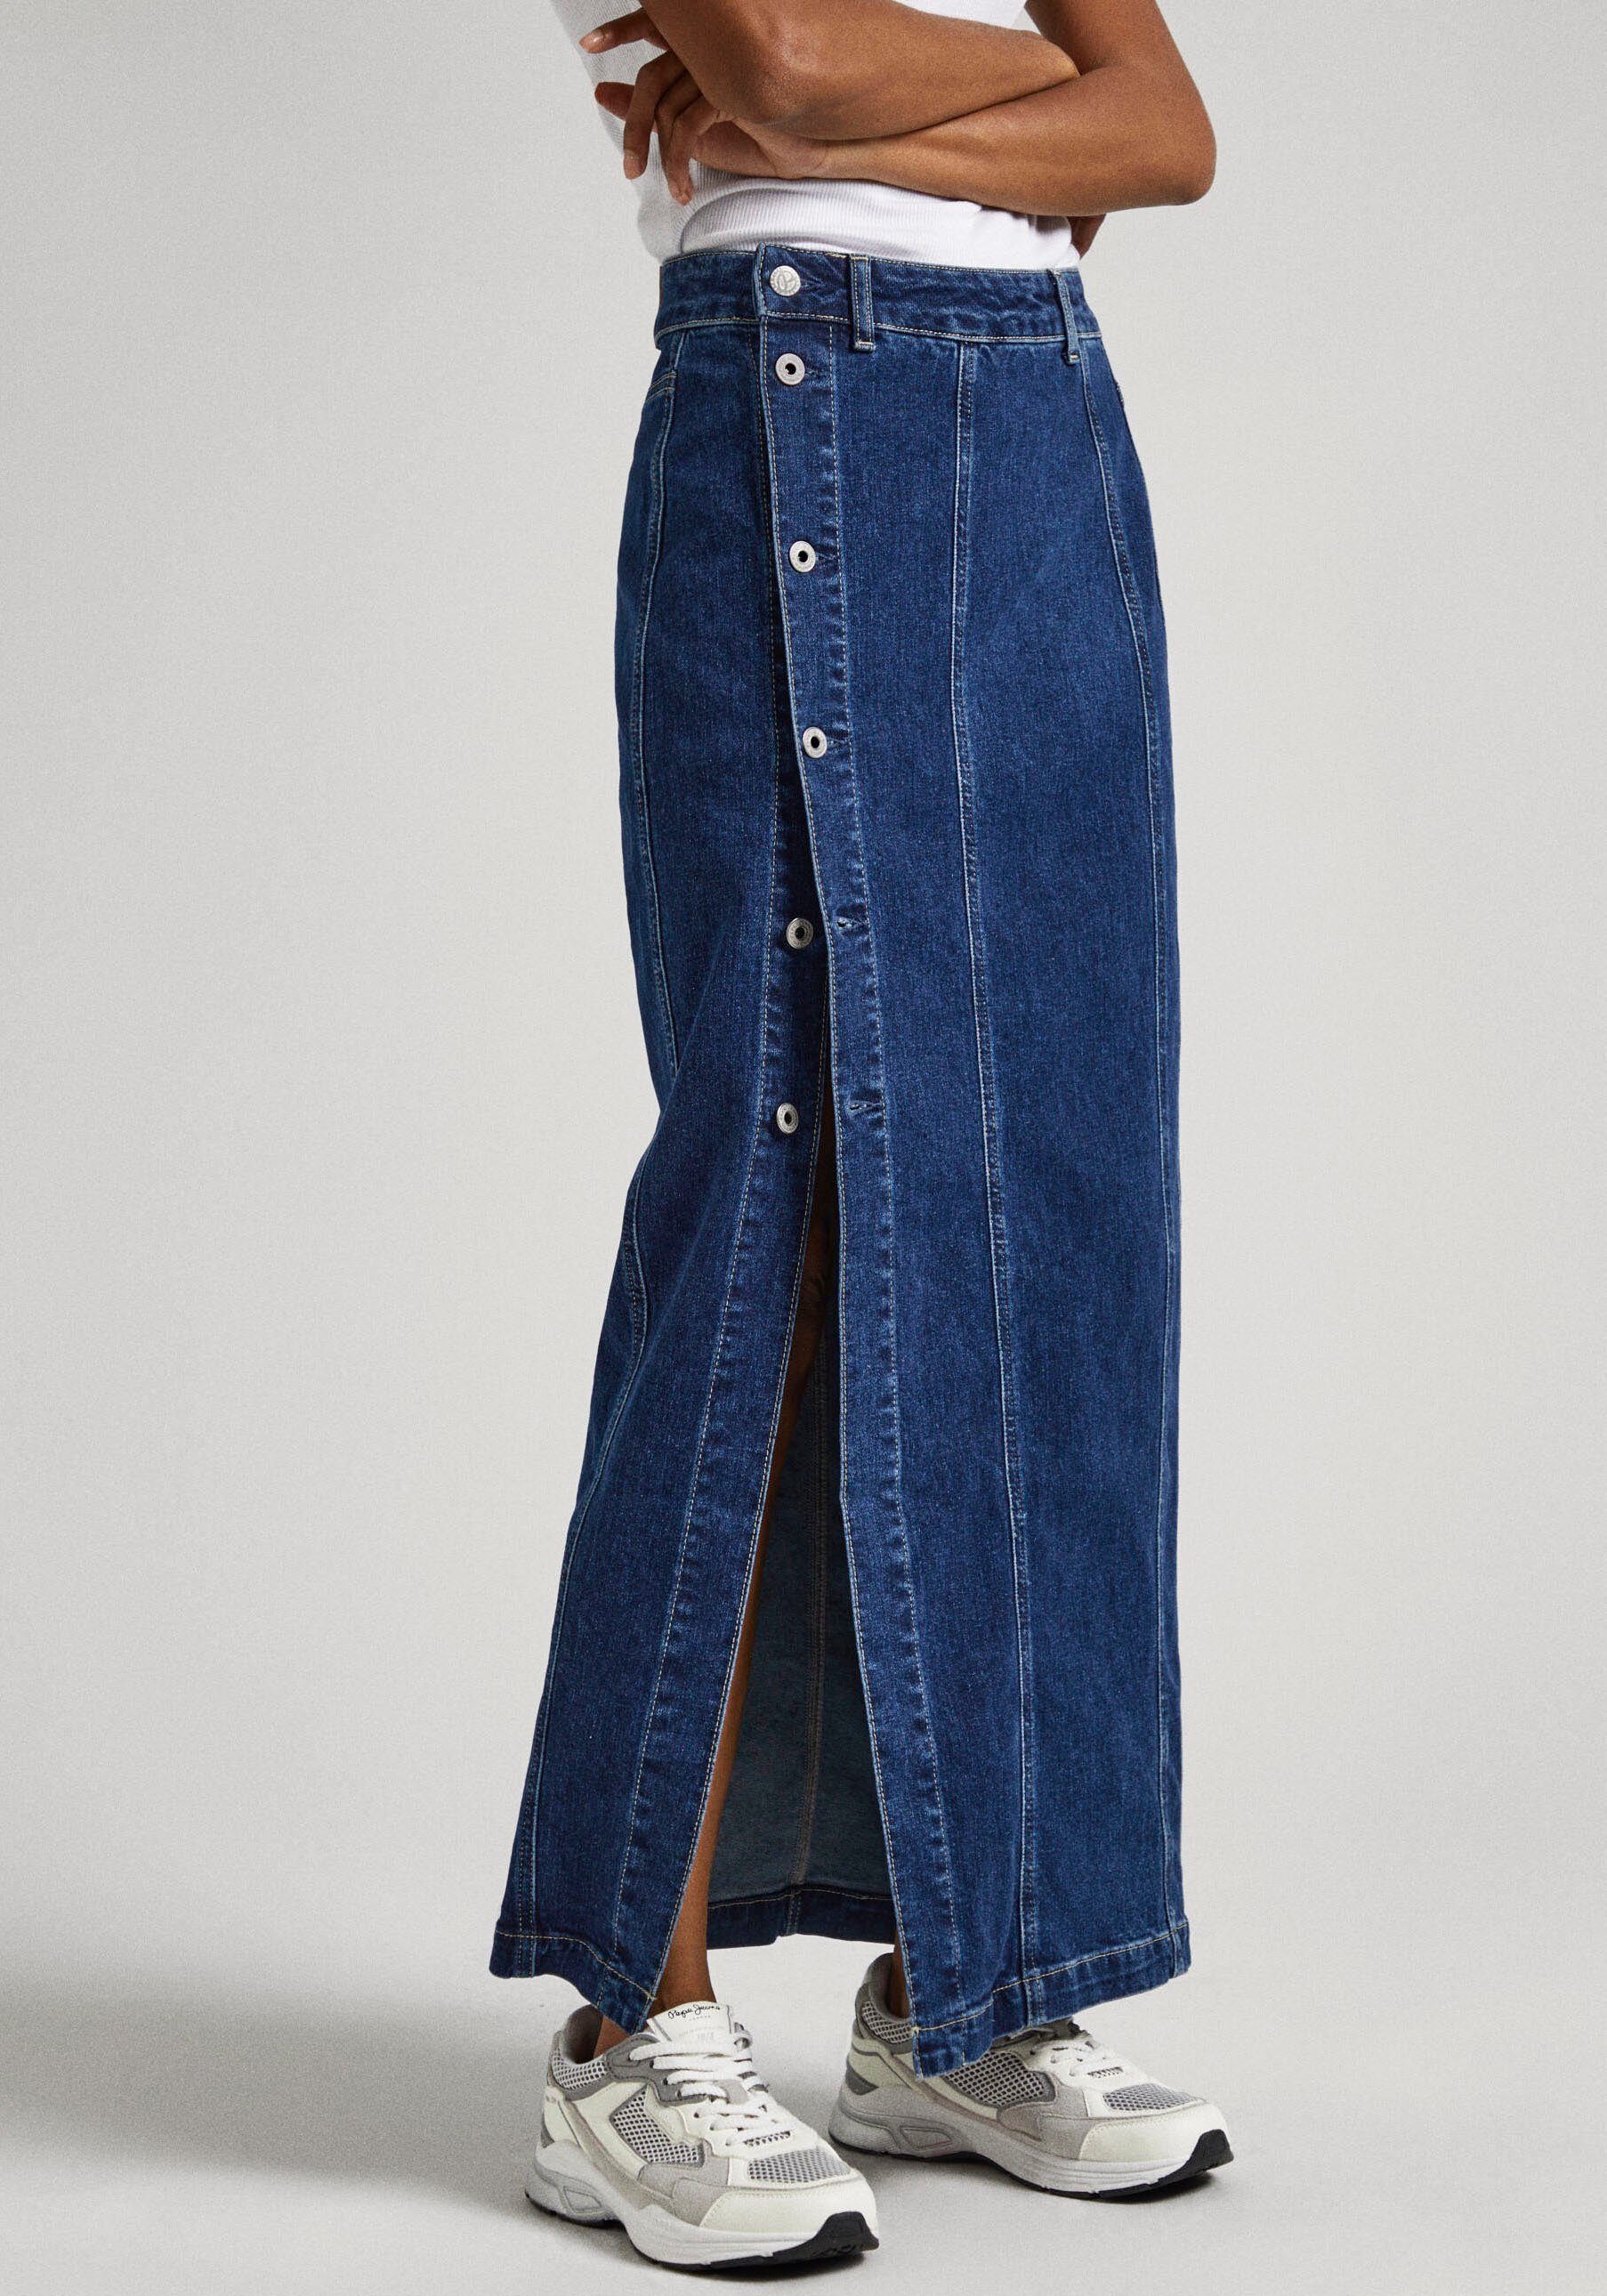 Pepe Jeans rok Midi Skirt